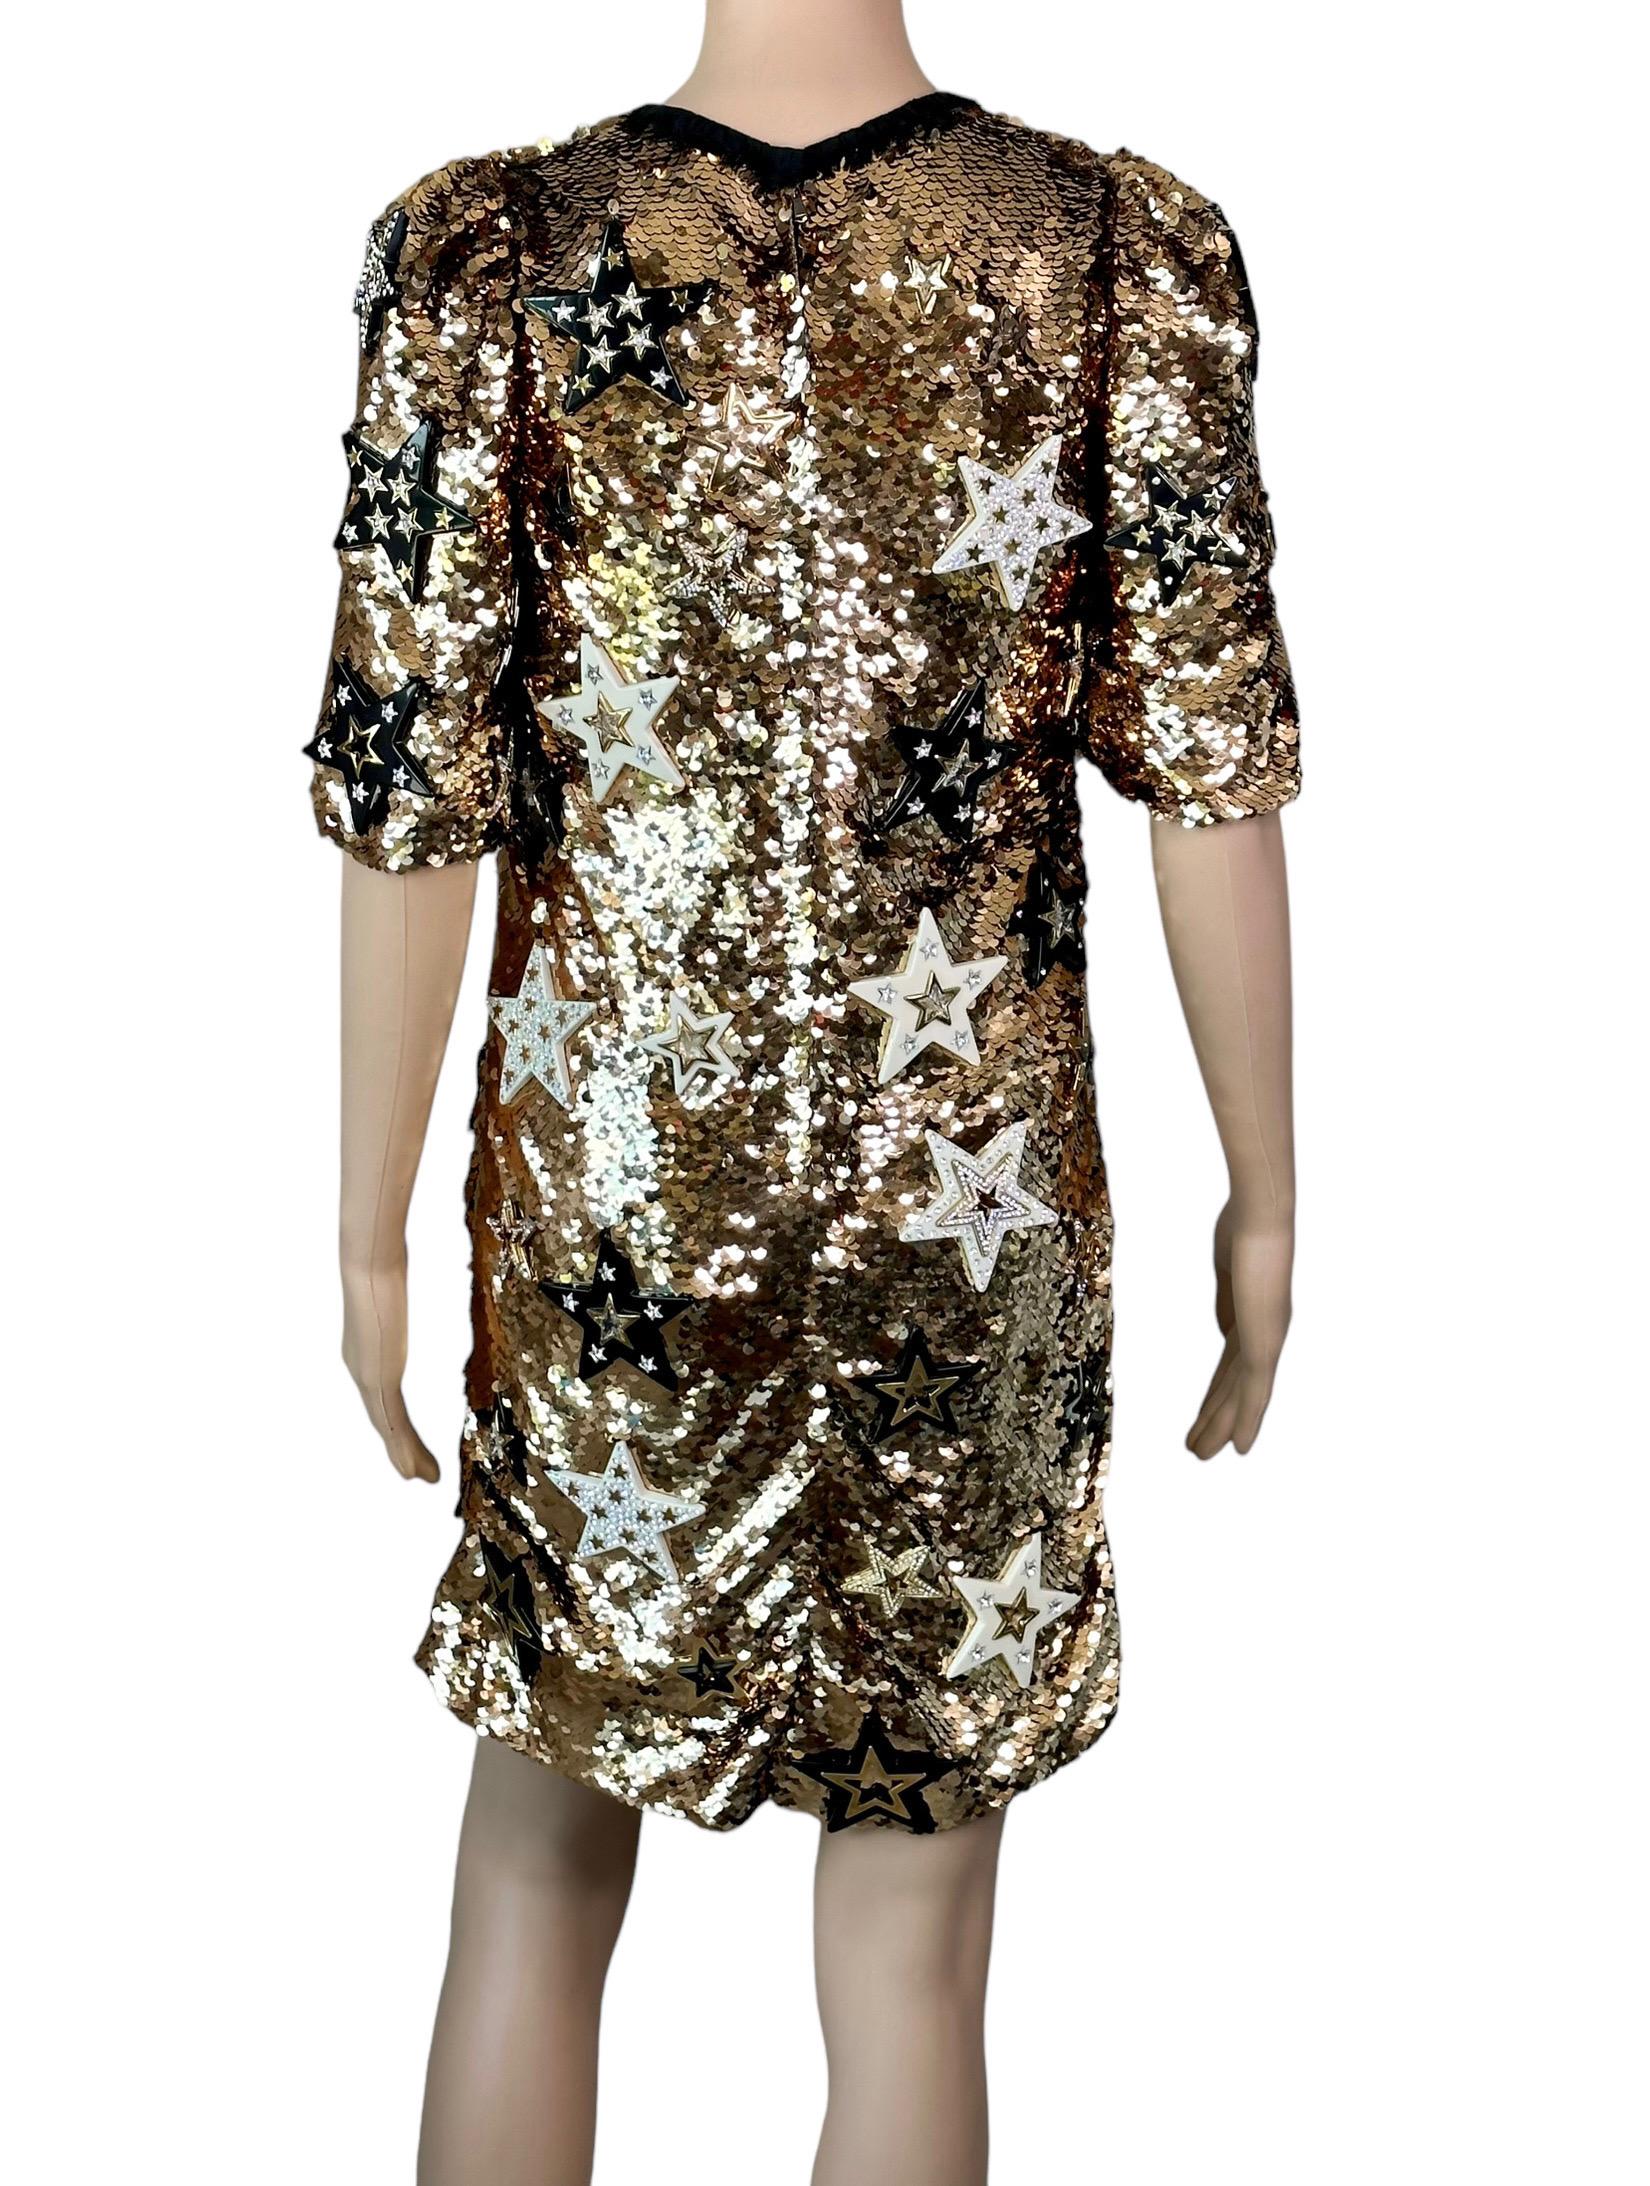 Dolce & Gabbana F/W 2011 Runway Unworn Embellished Star Sequined Gold Mini Dress For Sale 3